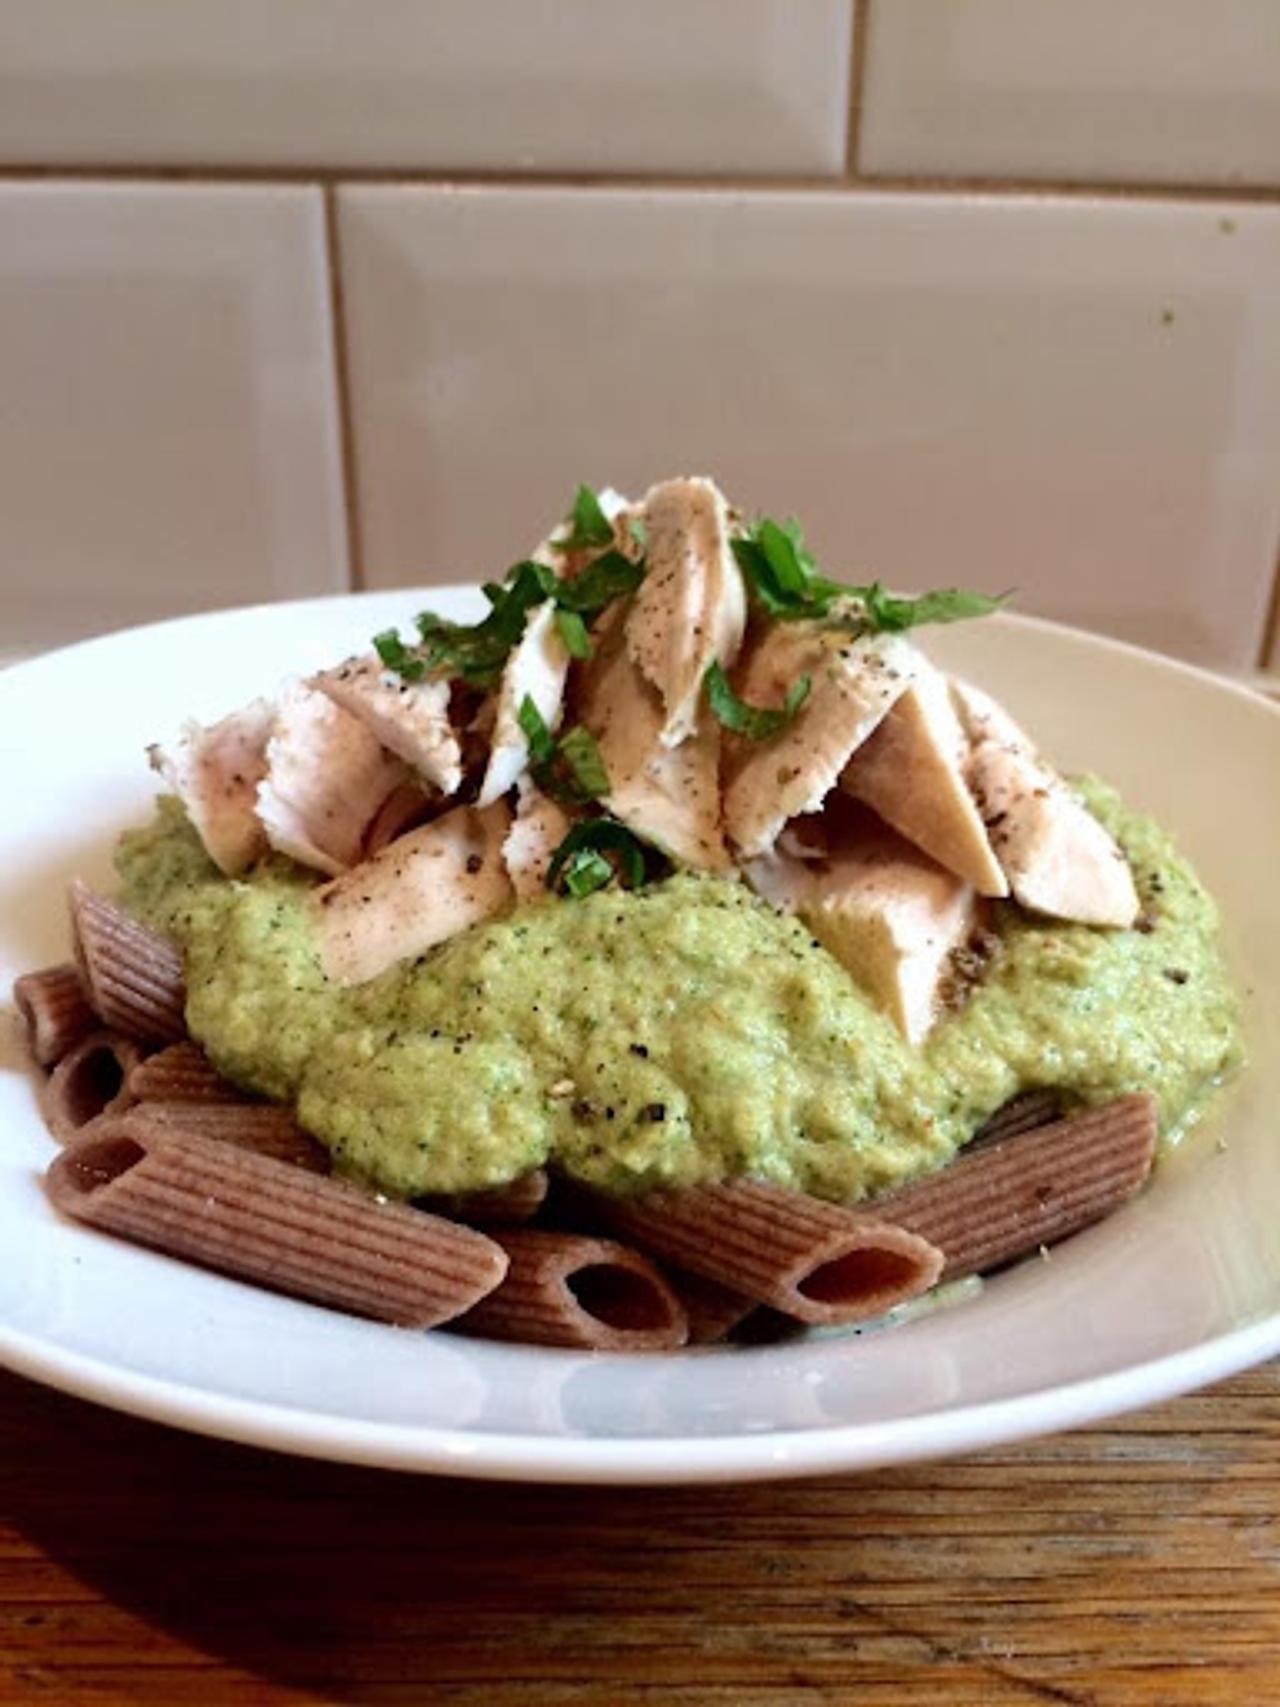 A Quick, Easy & Delicious Healthy Dinner Recipe: Broccoli Pesto Pasta With Streamed Chicken